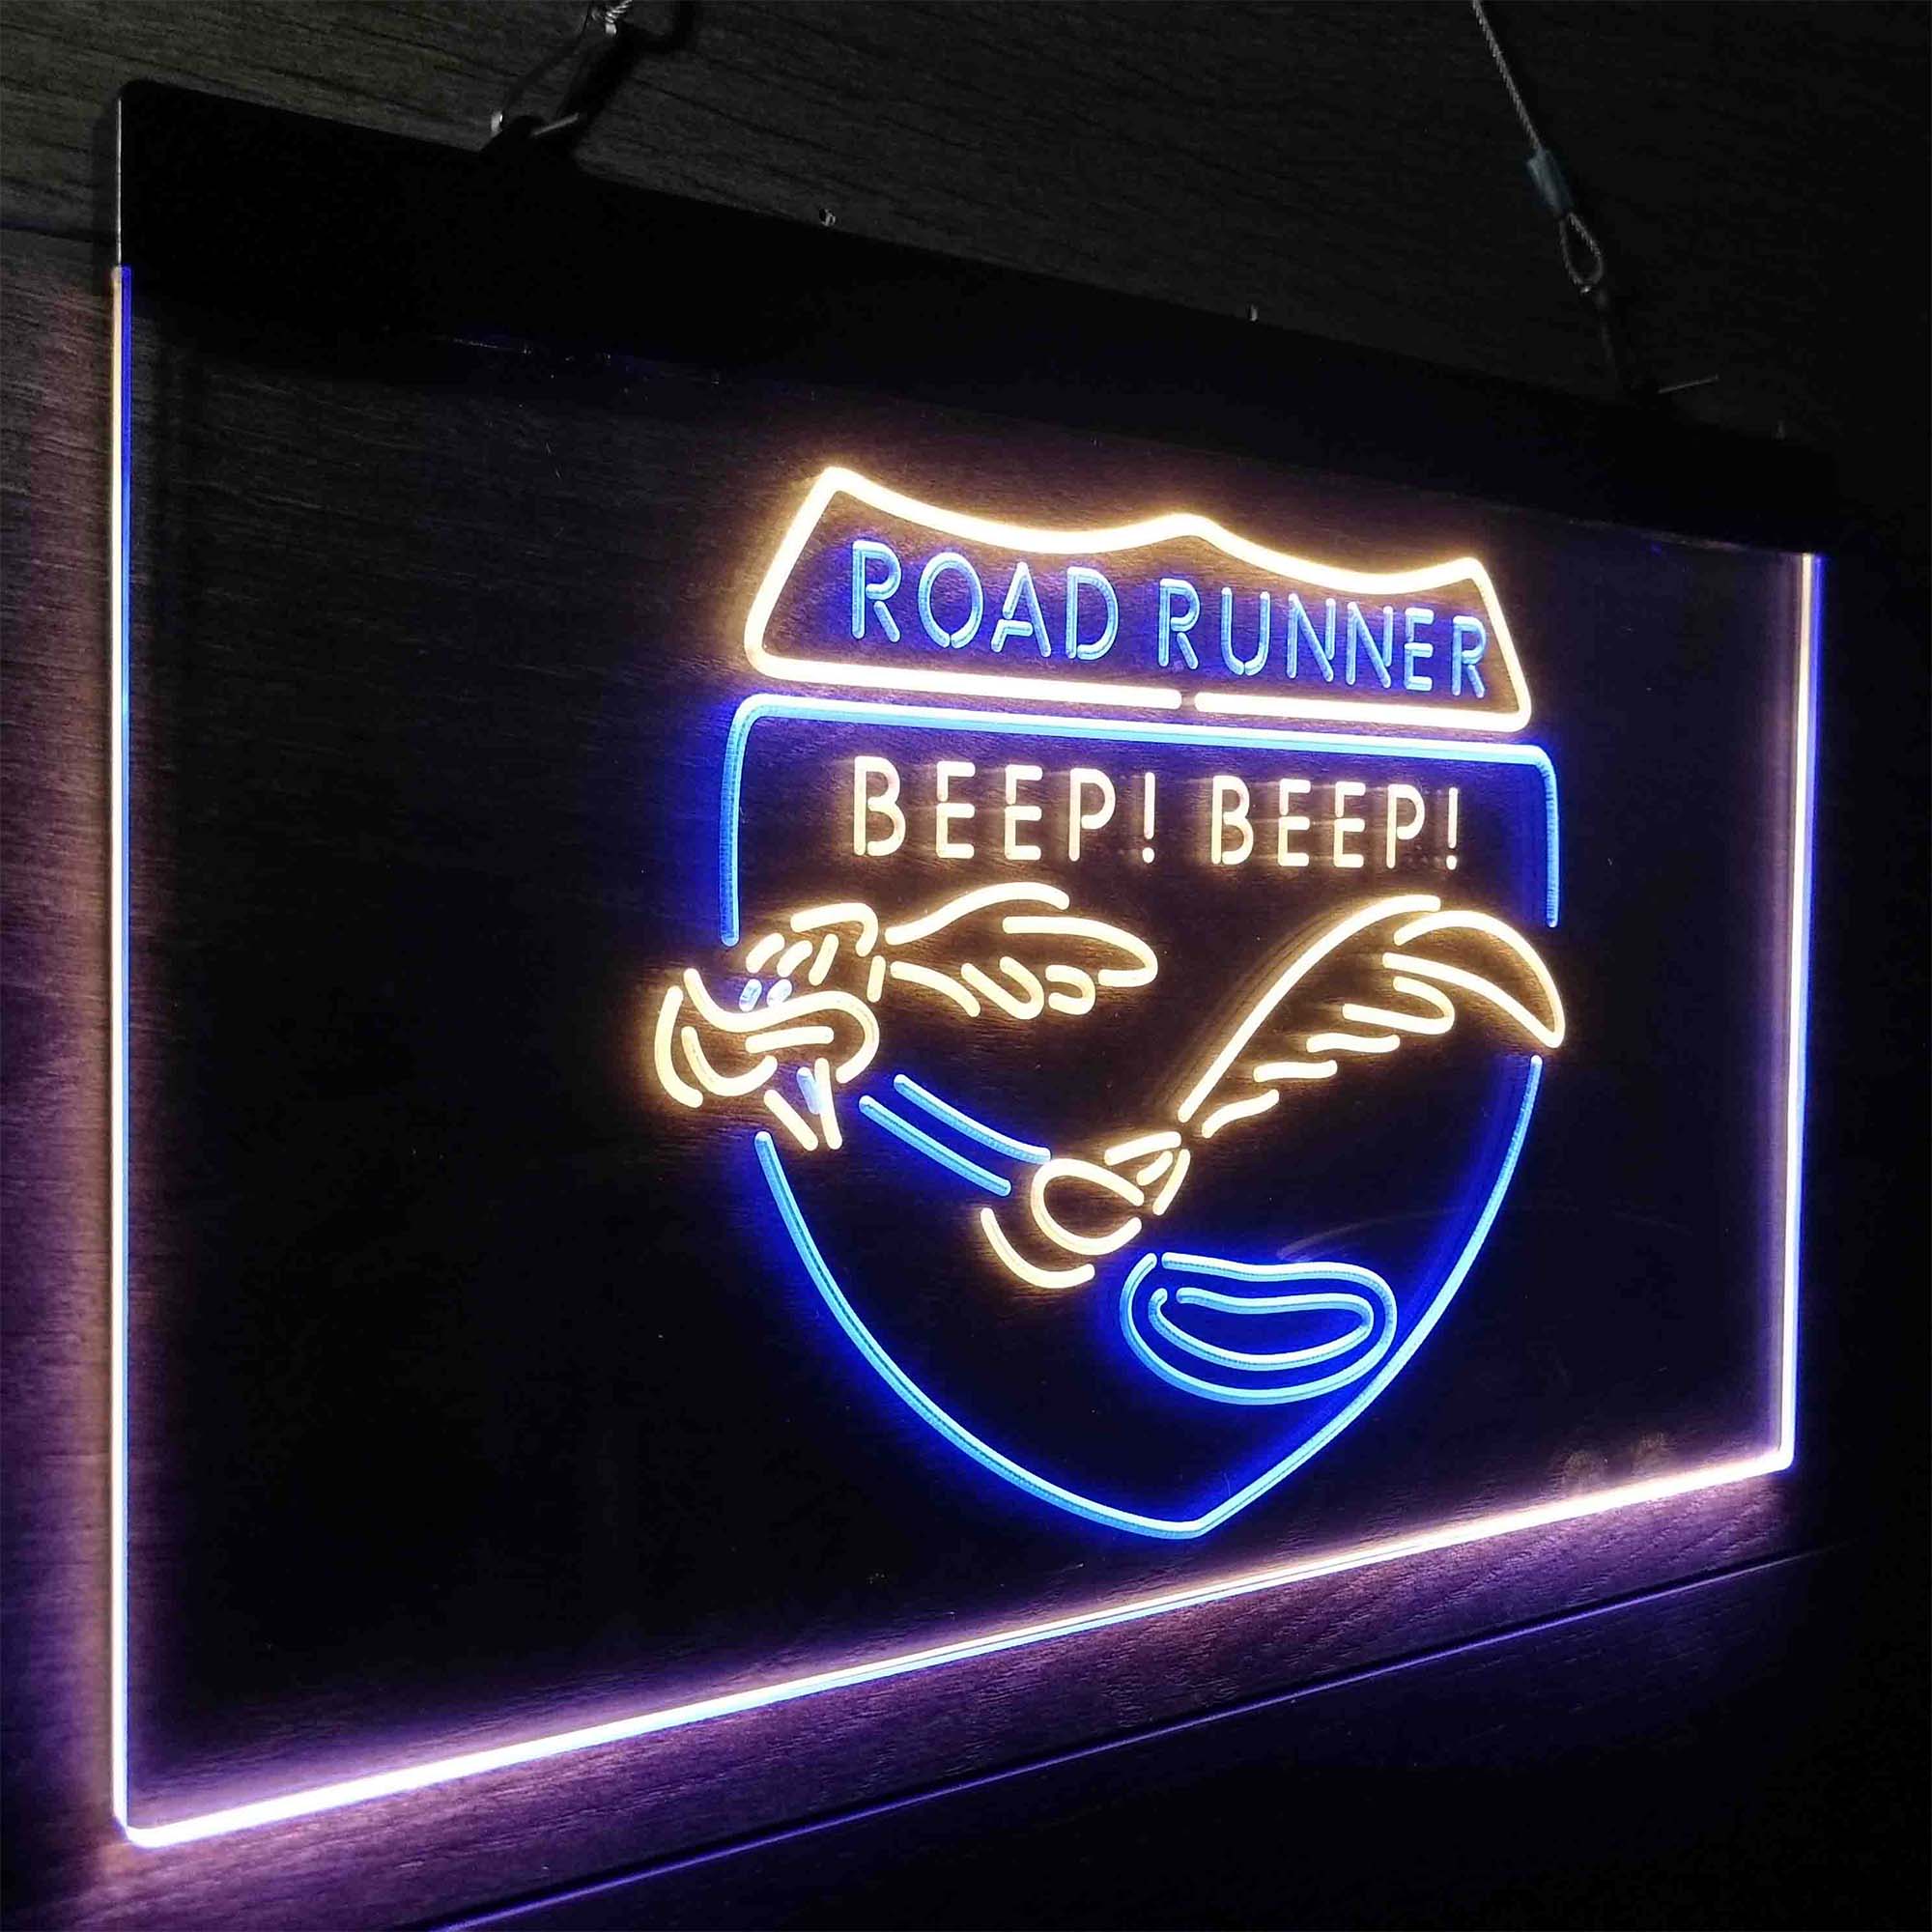 Road Runner Beep Beep LED Neon Sign